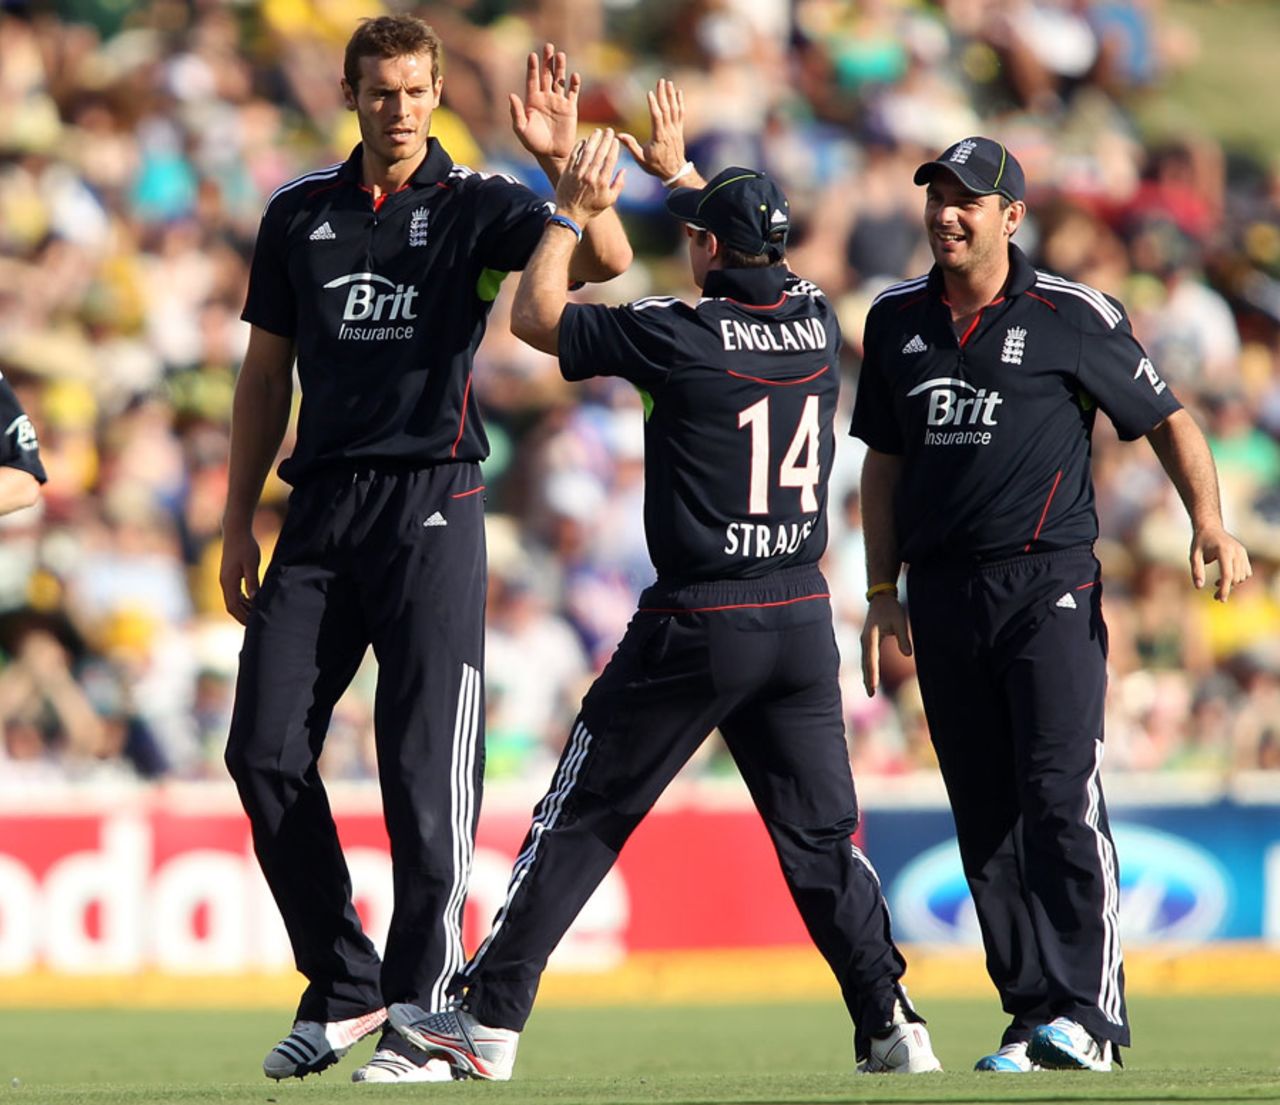 Chris Tremlett is congratulated on a wicket, Australia v England, 4th ODI, Adelaide, January 26, 2011